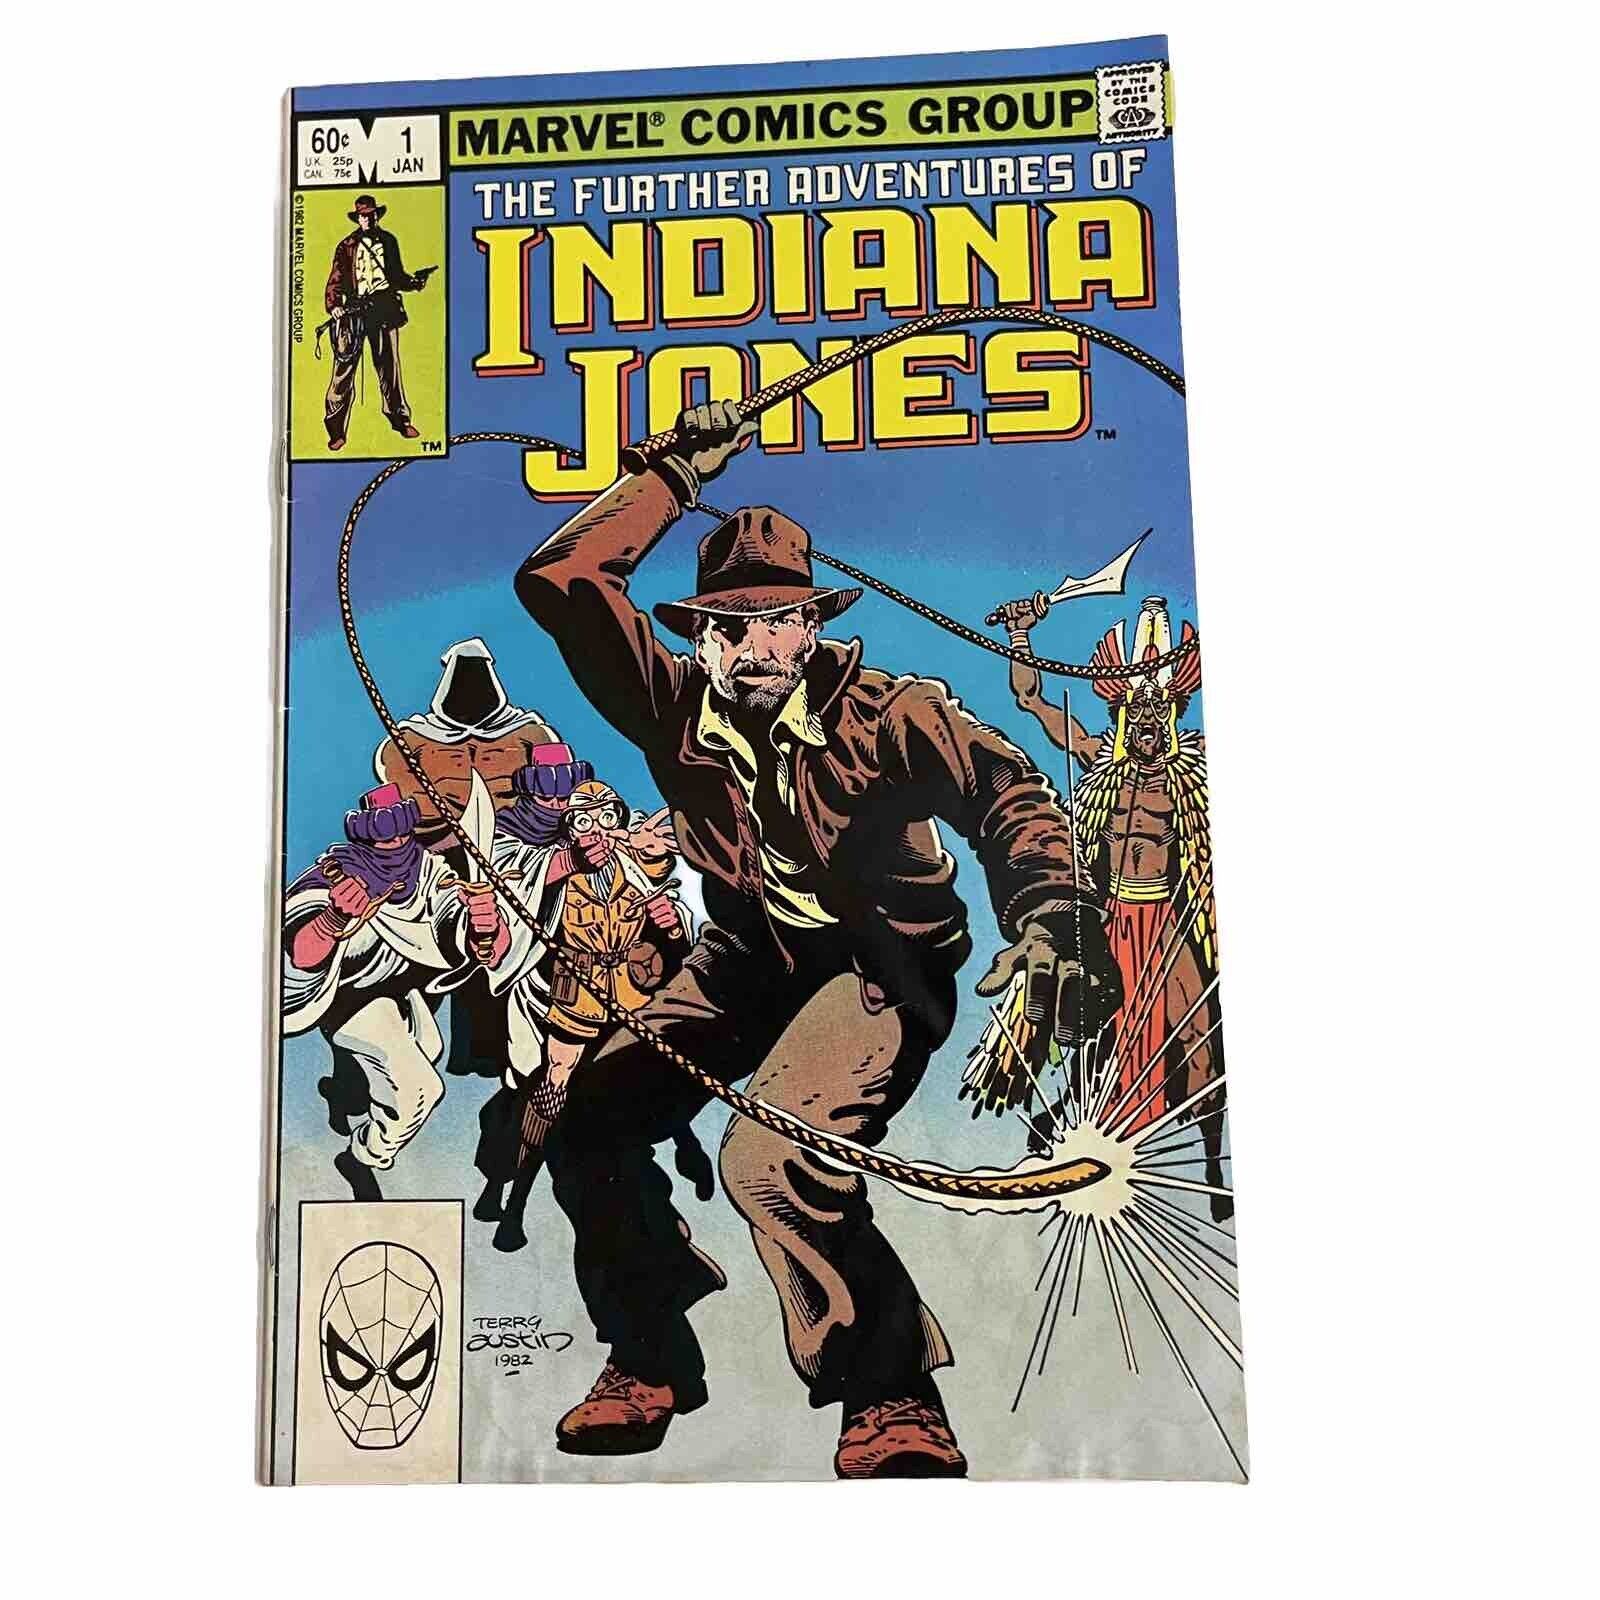 The Further Adventures of Indiana Jones #1 Jan 1983 Marvel Comics Vintage Comic